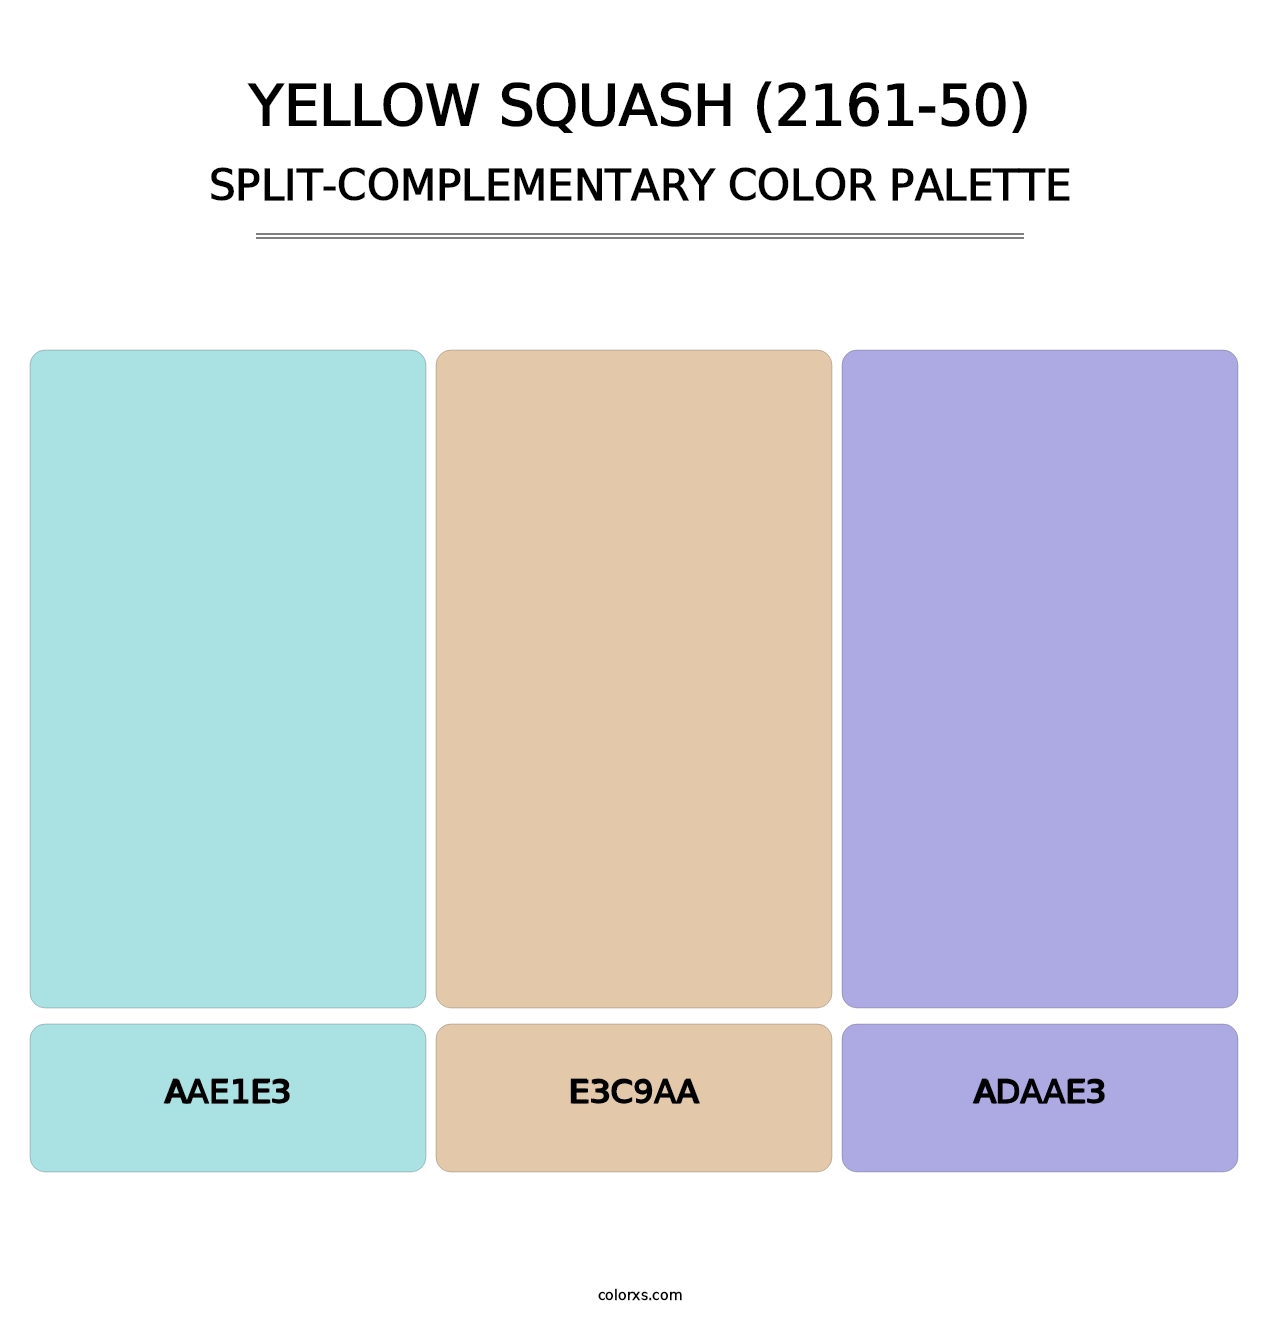 Yellow Squash (2161-50) - Split-Complementary Color Palette